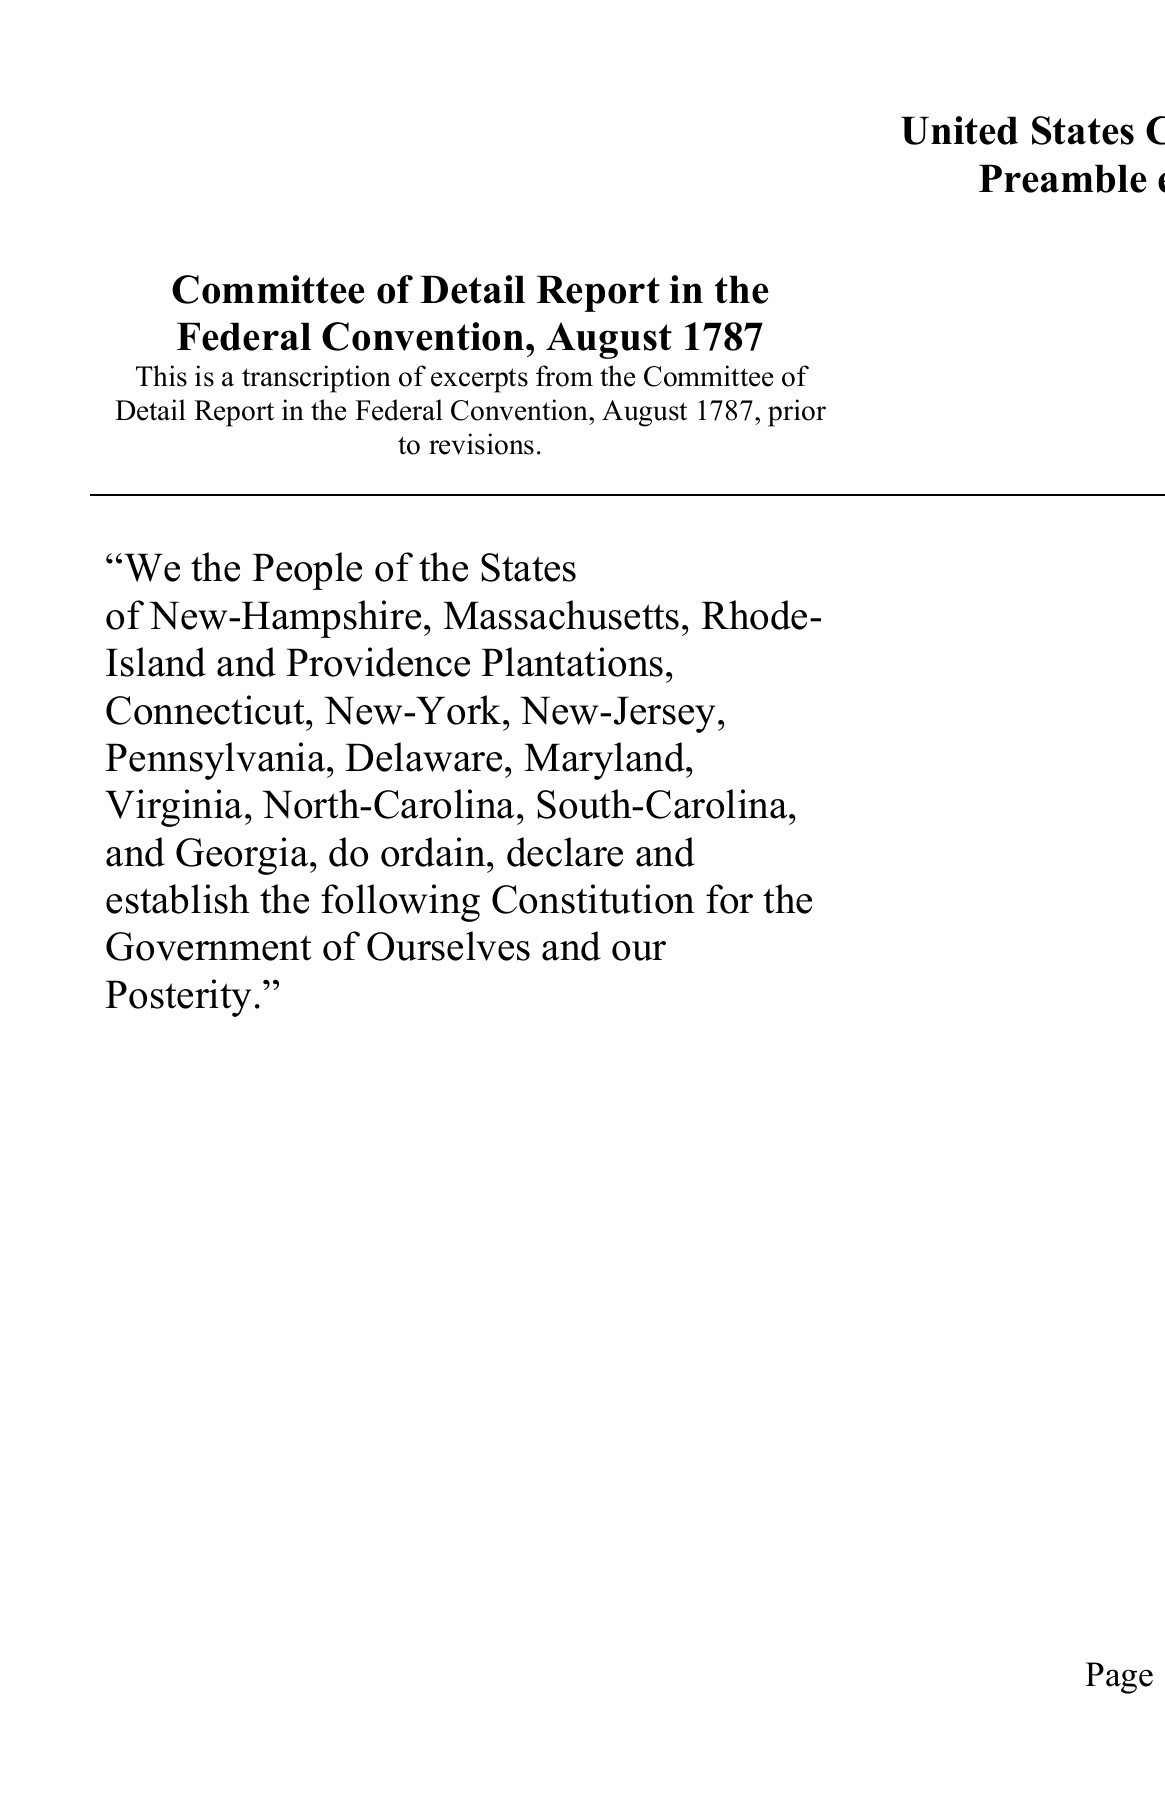 United States Constitution Worksheet United States Constitution Worksheet Library Of Congress